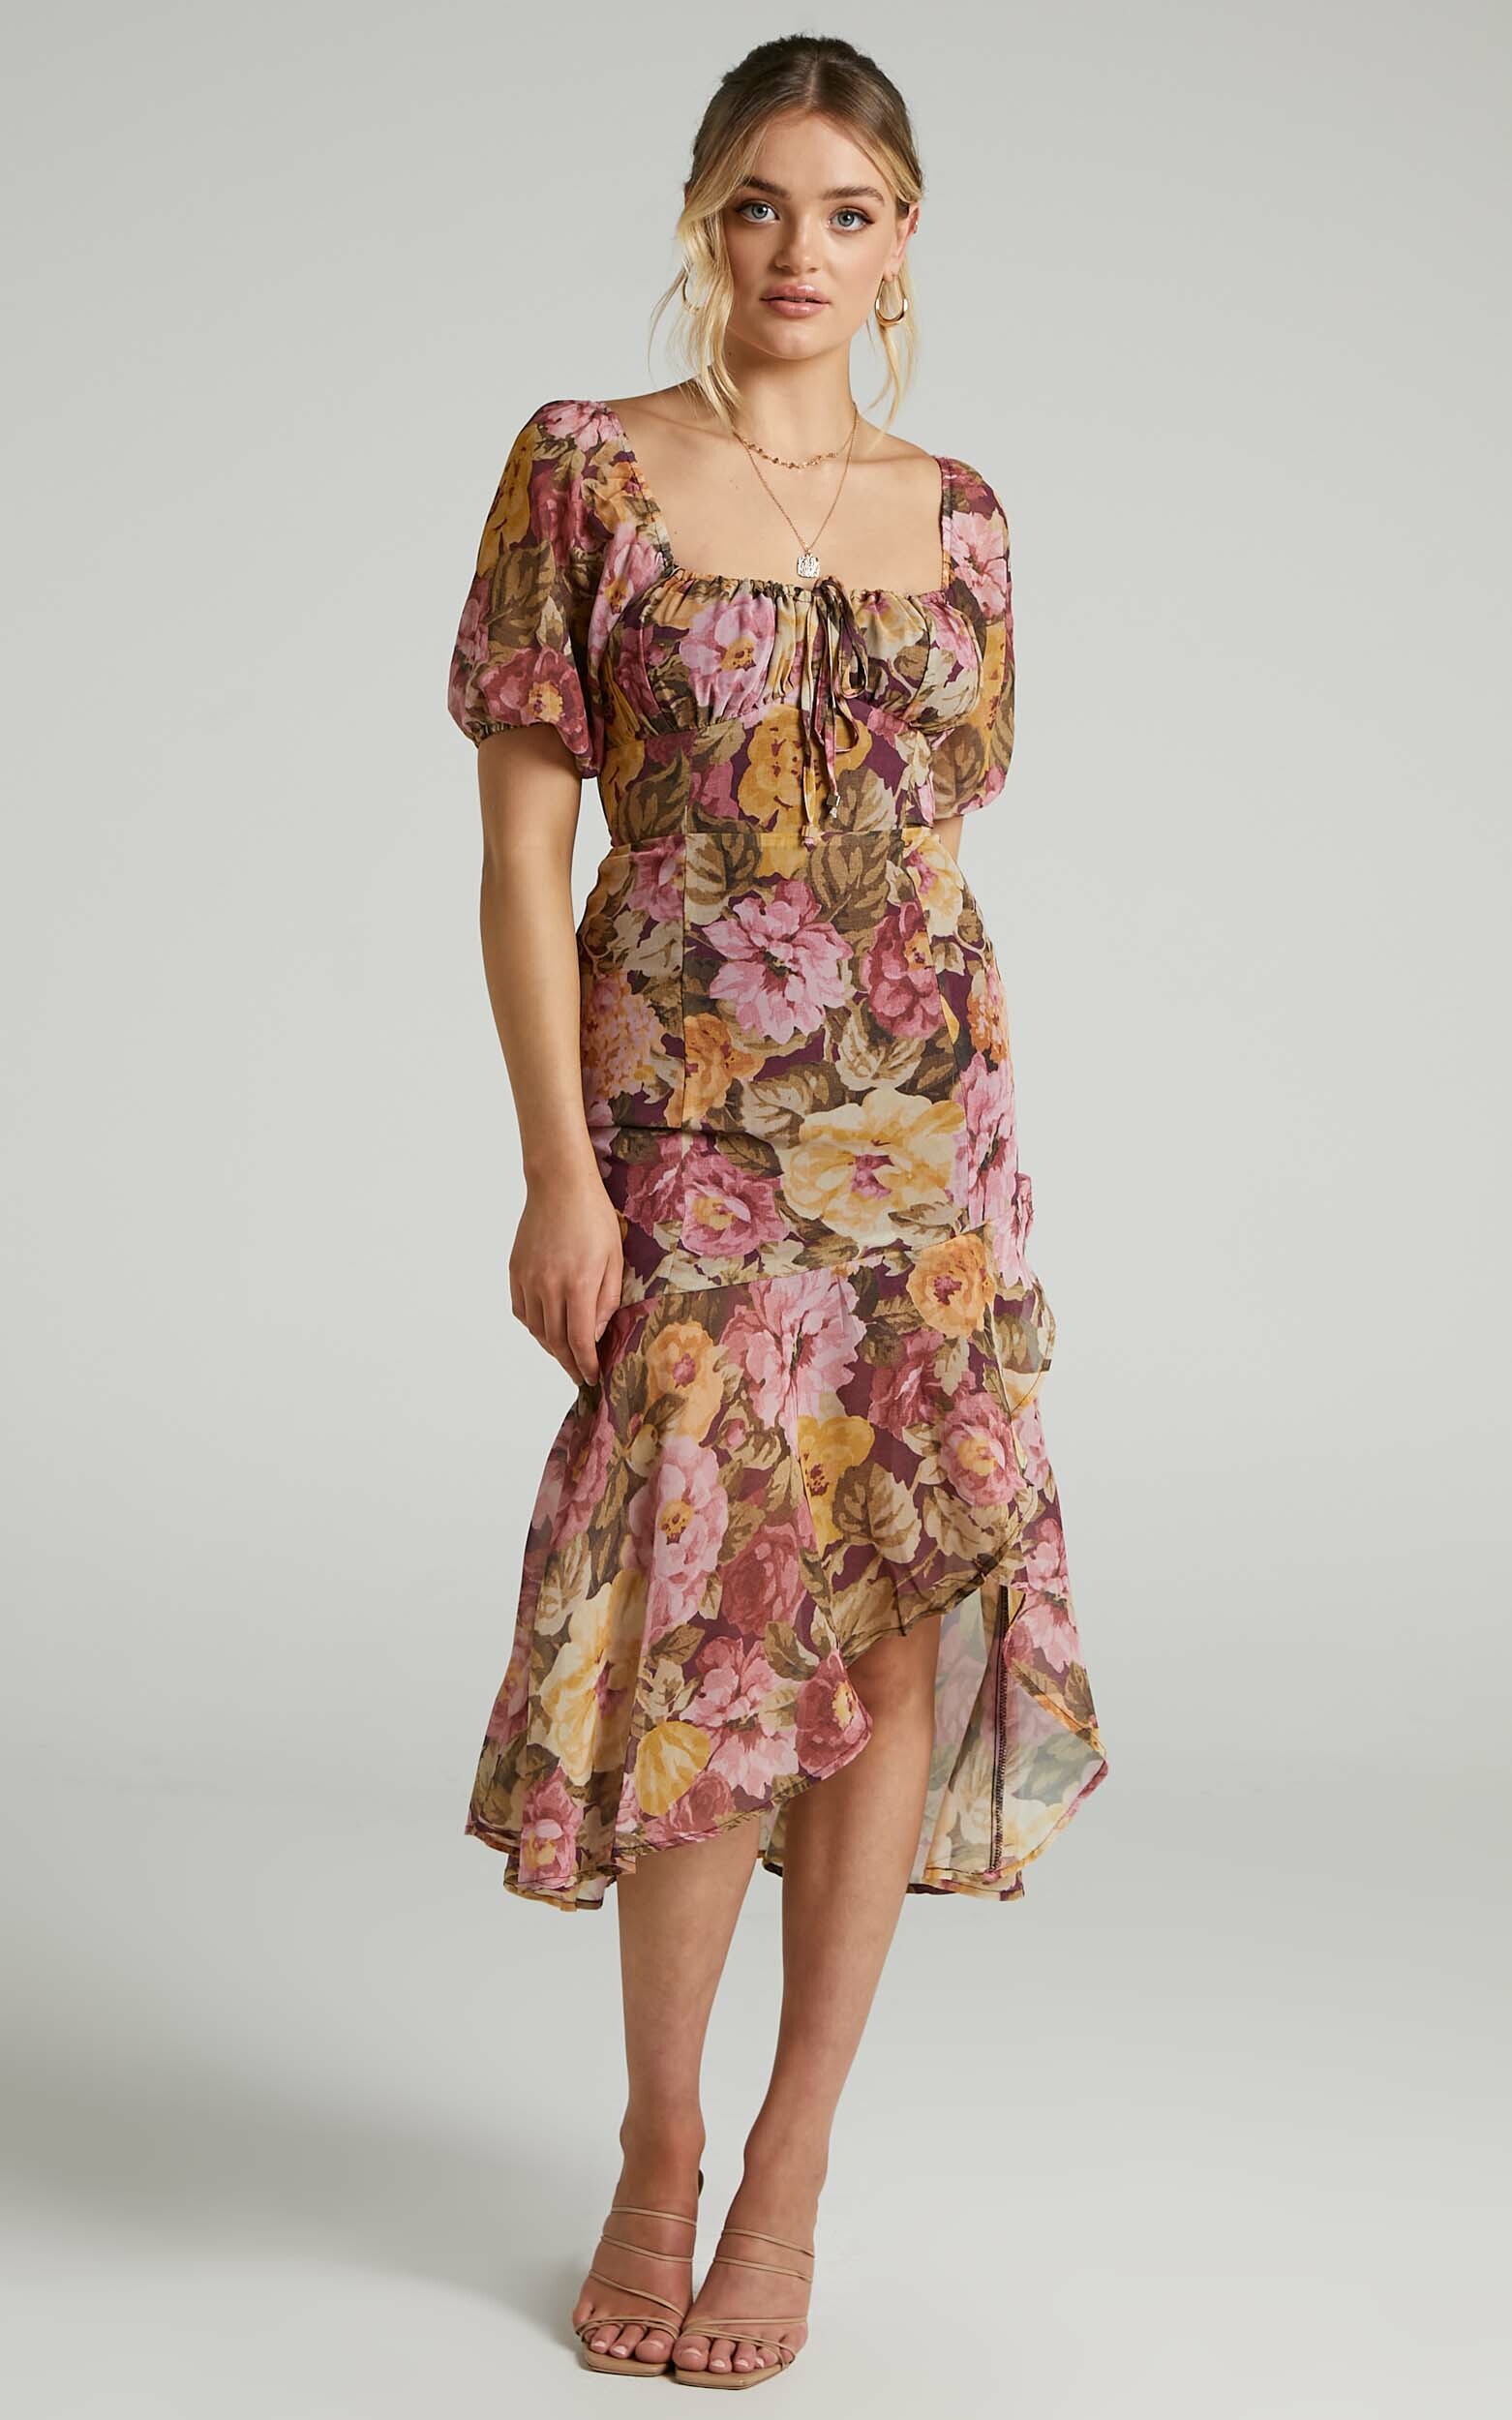 Jasalina Puff Sleeve Dress in Classic Floral | Showpo USA